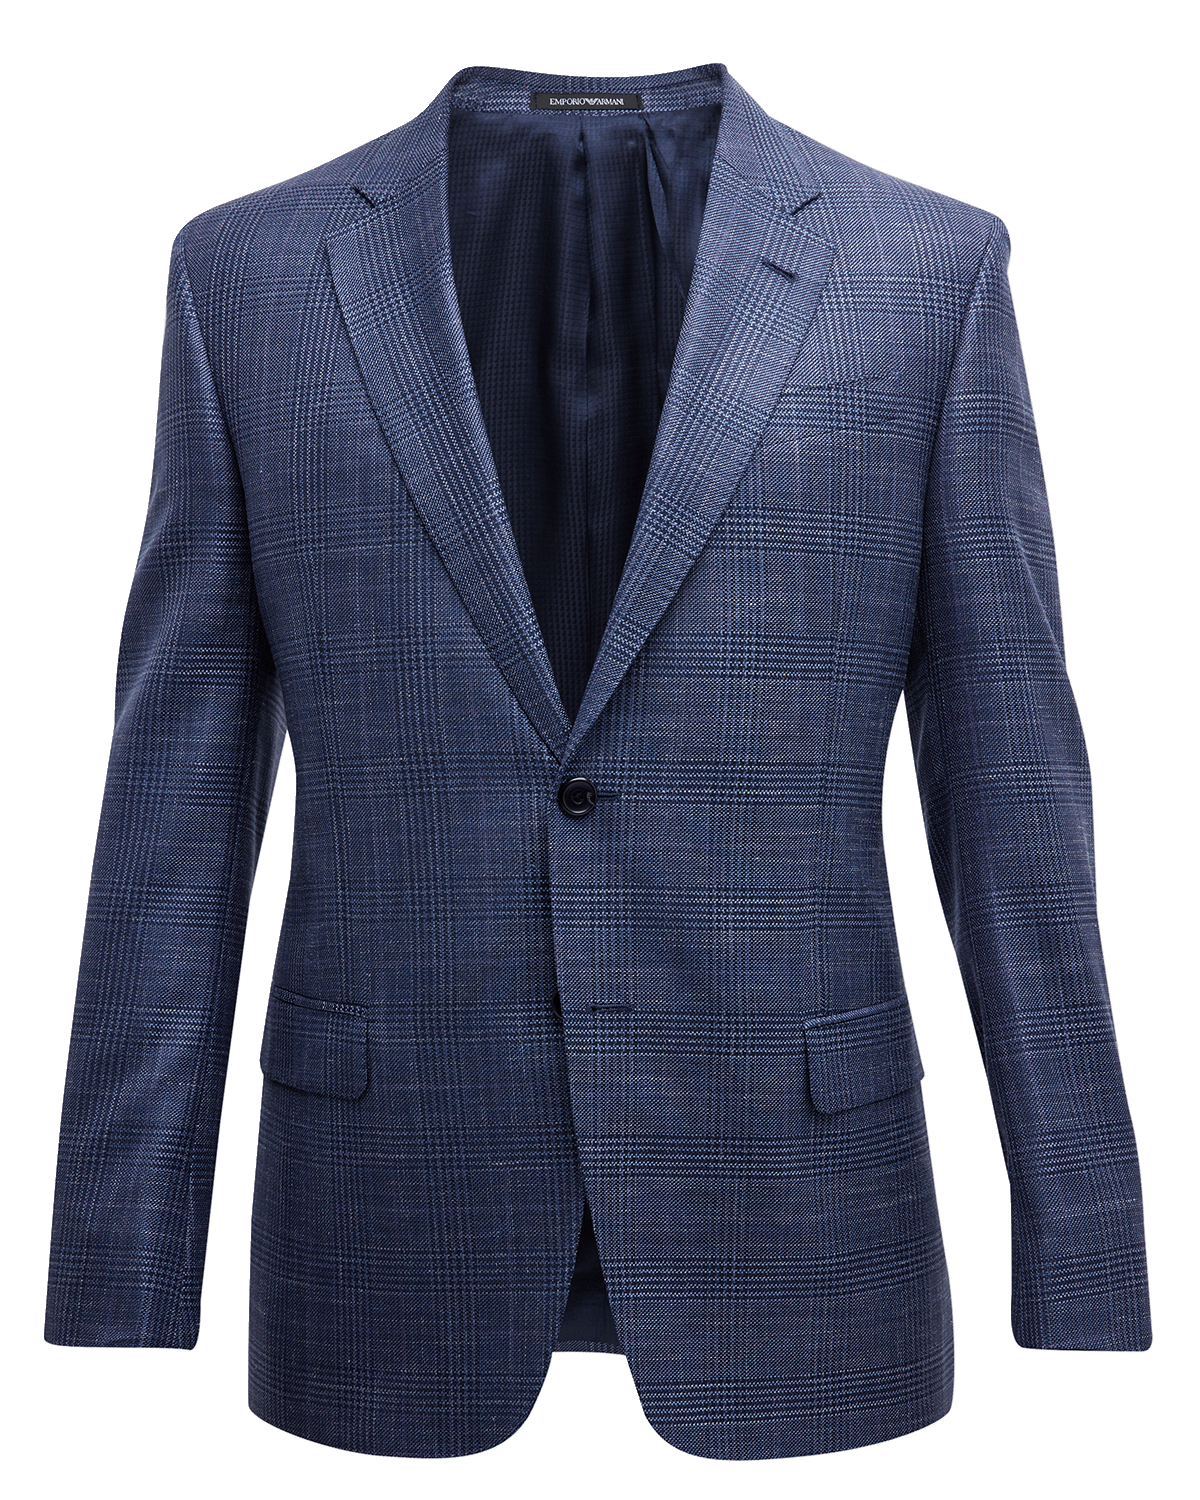 Emporio Armani Men's Textured Check Dinner Jacket | Neiman Marcus